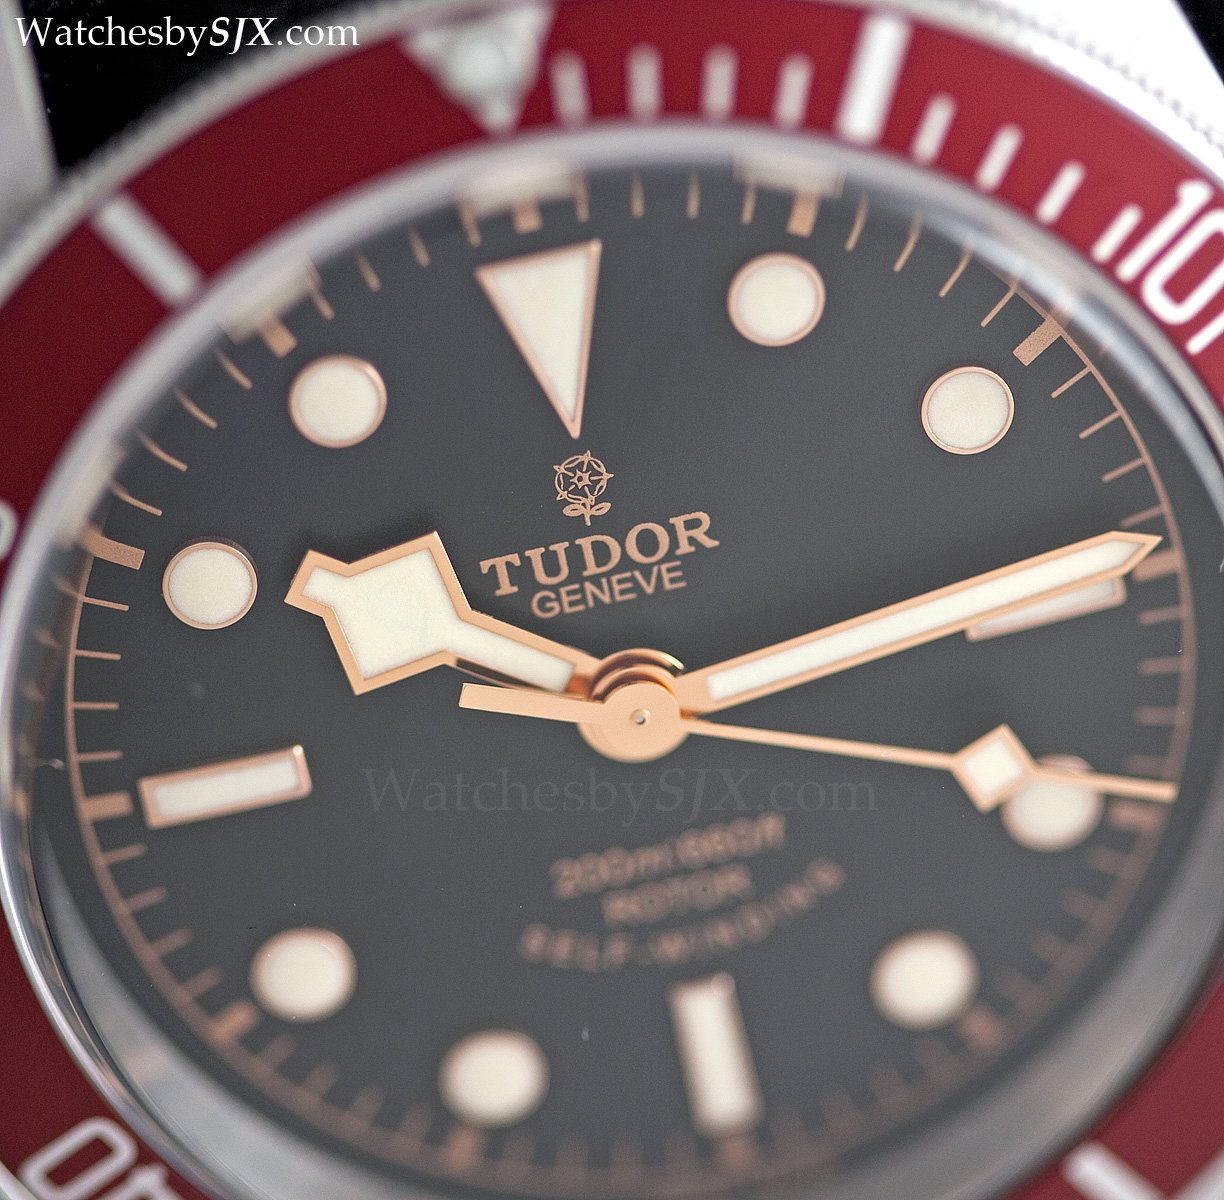 Tudor+Black+Bay+dial+detail+%25284%2529.jpg